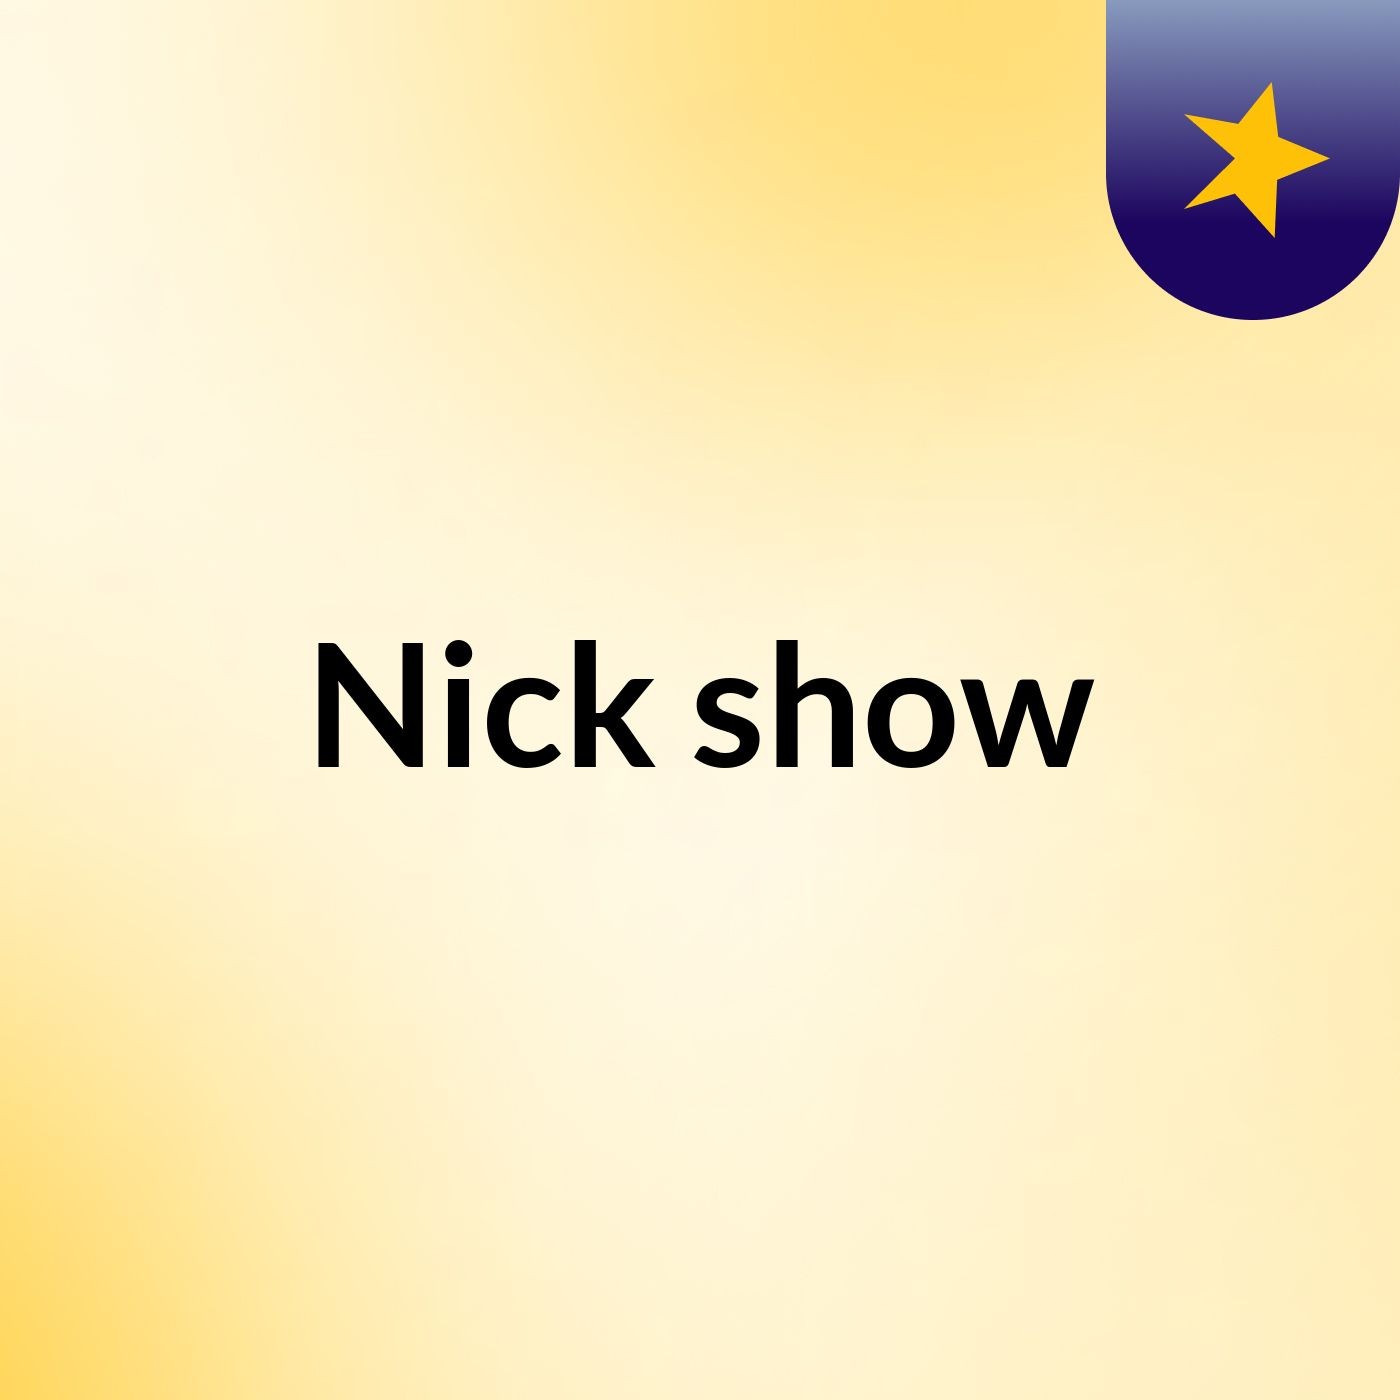 Nick show